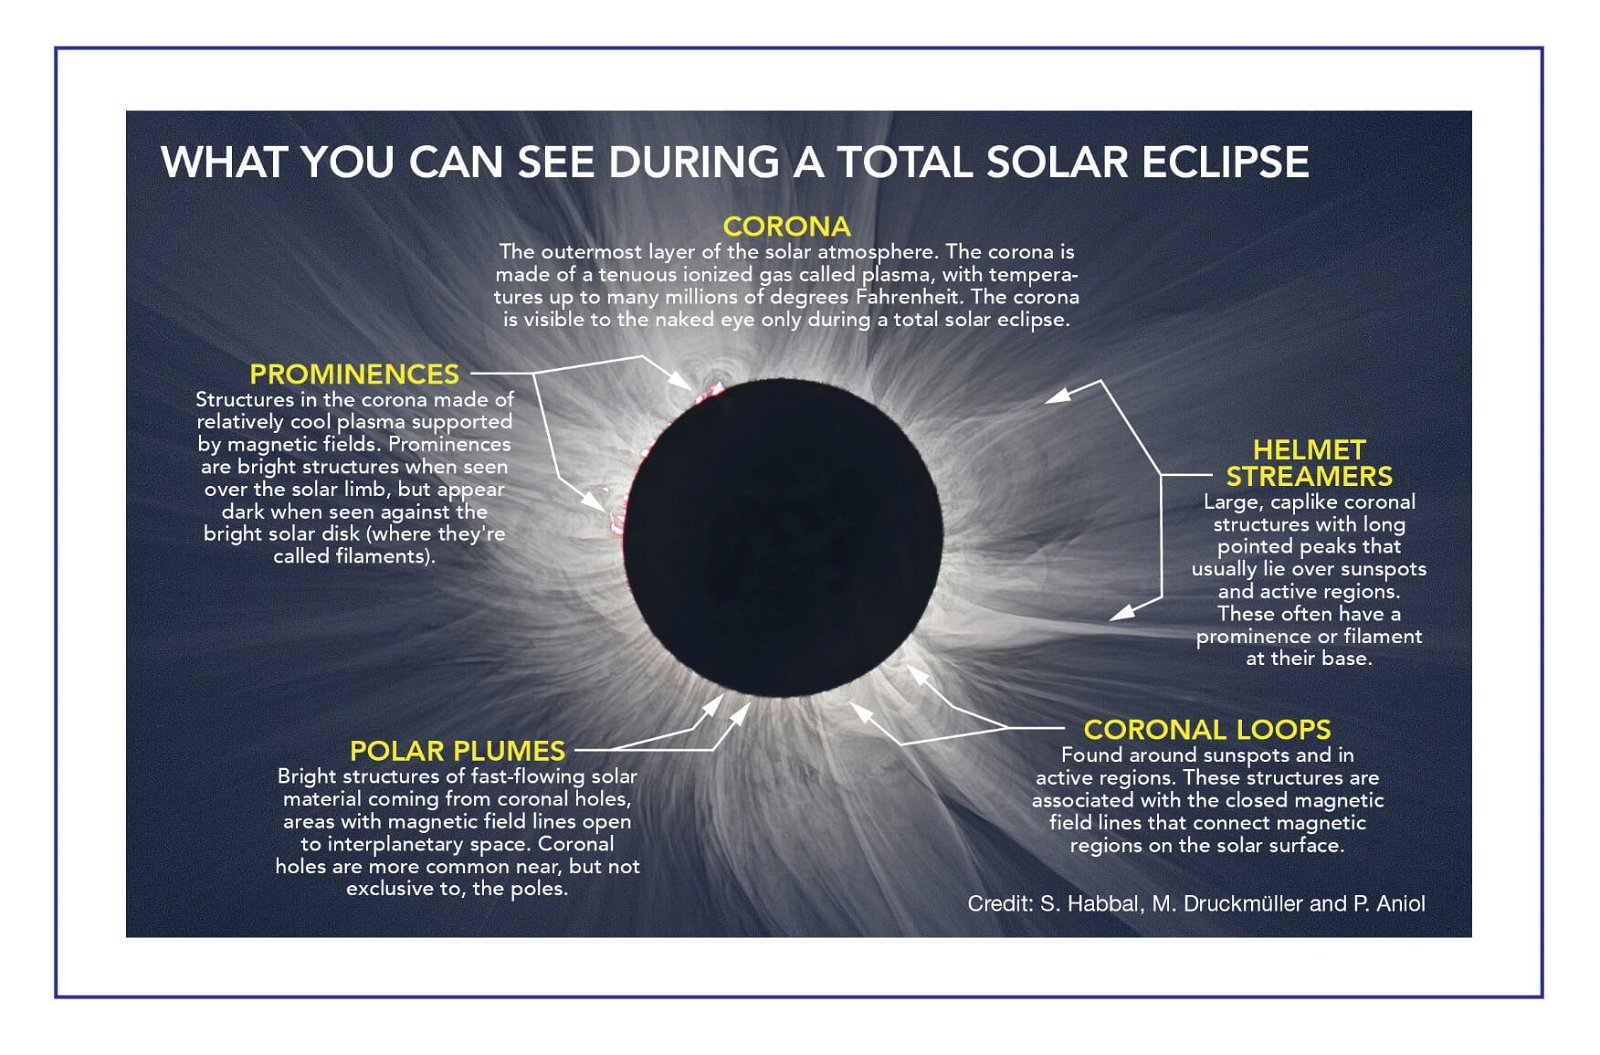 A diagram of the sun's eclipse
Description automatically generated